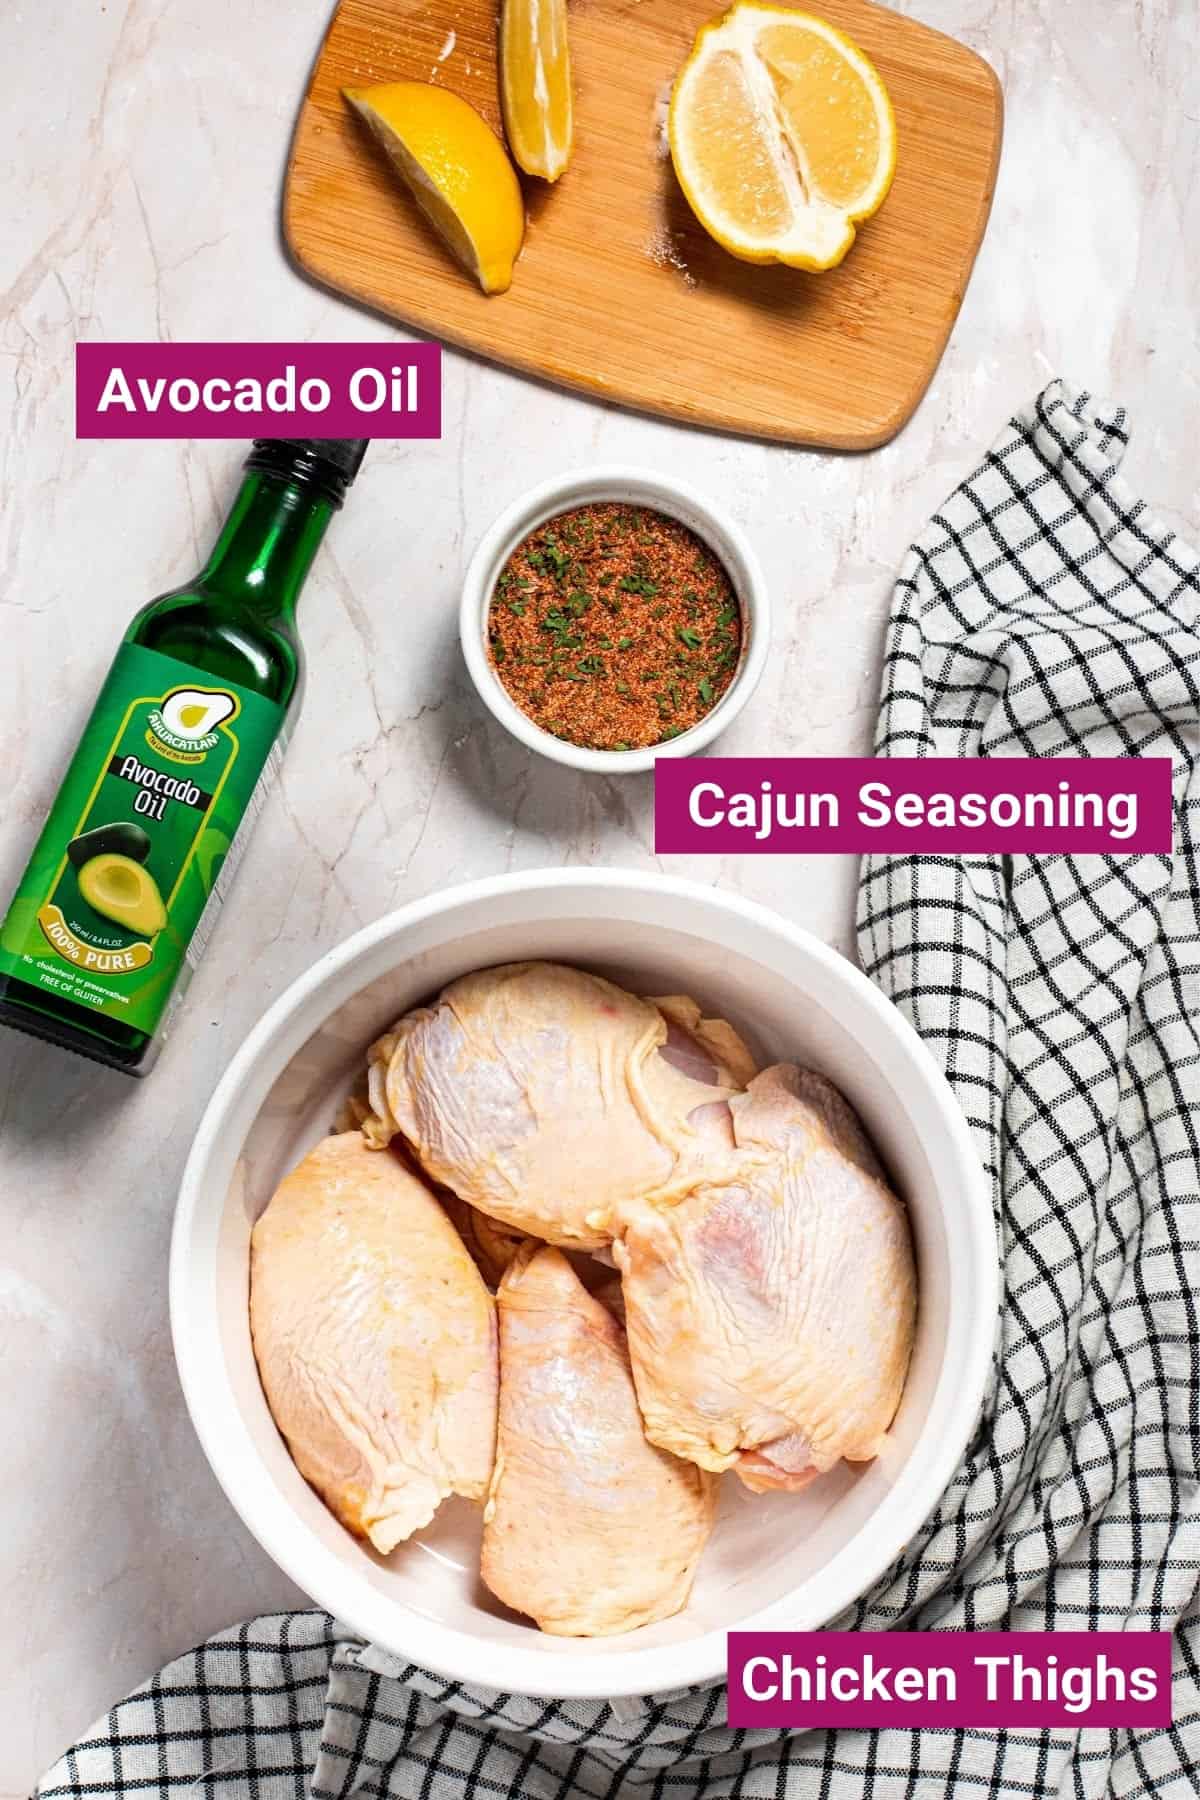 chicken thighs, avocado oil, cajun seasoning, and lemon in separate bowls